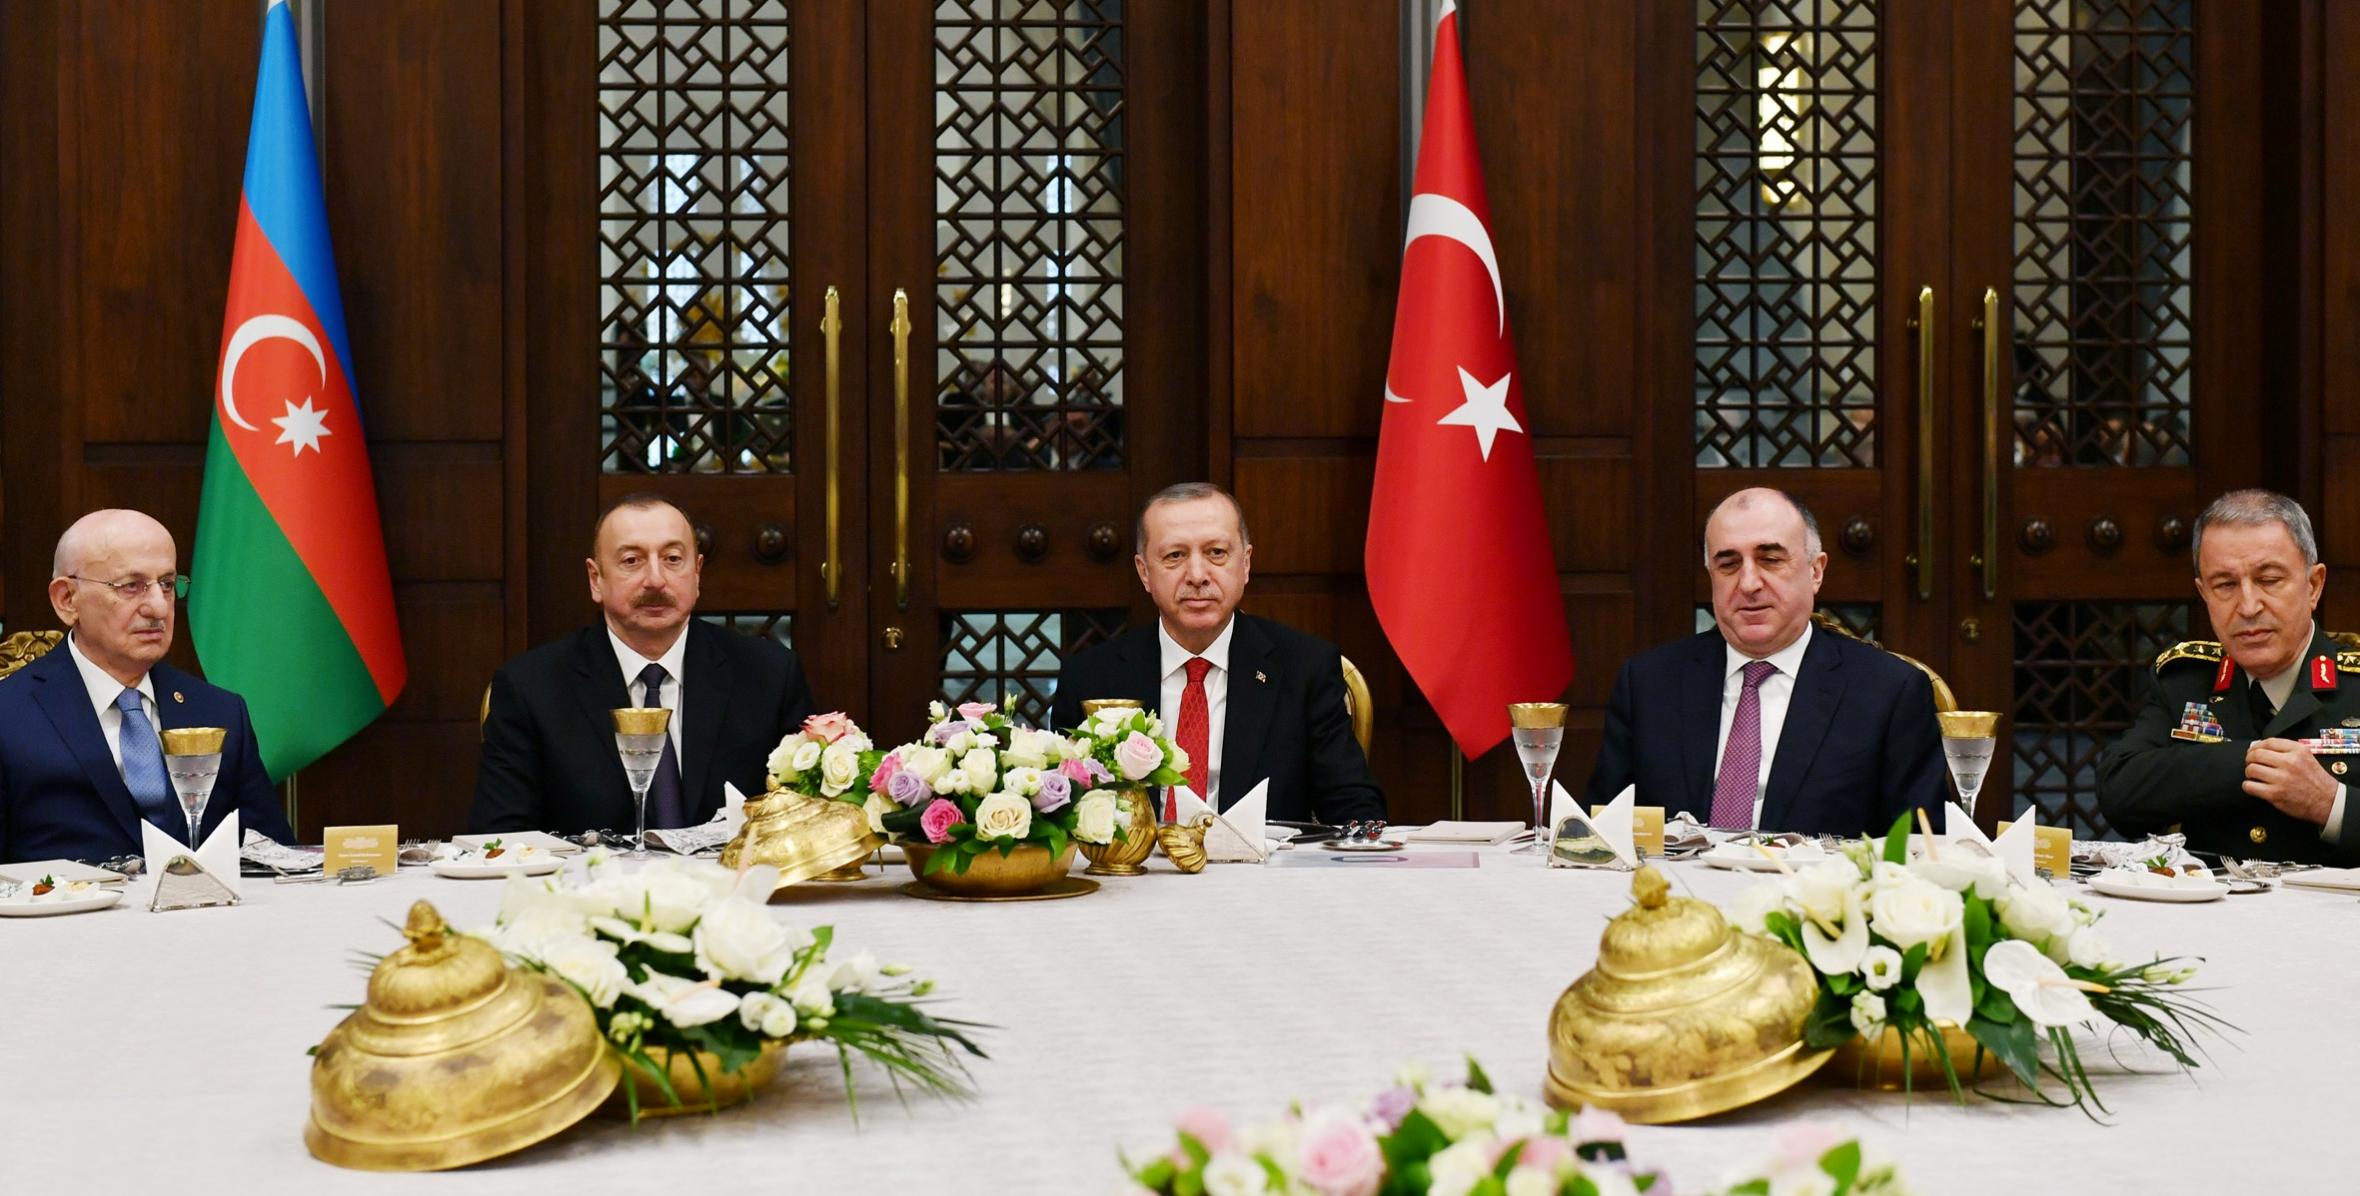 Turkish President Recep Tayyip Erdogan hosted official dinner in honor of President Ilham Aliyev